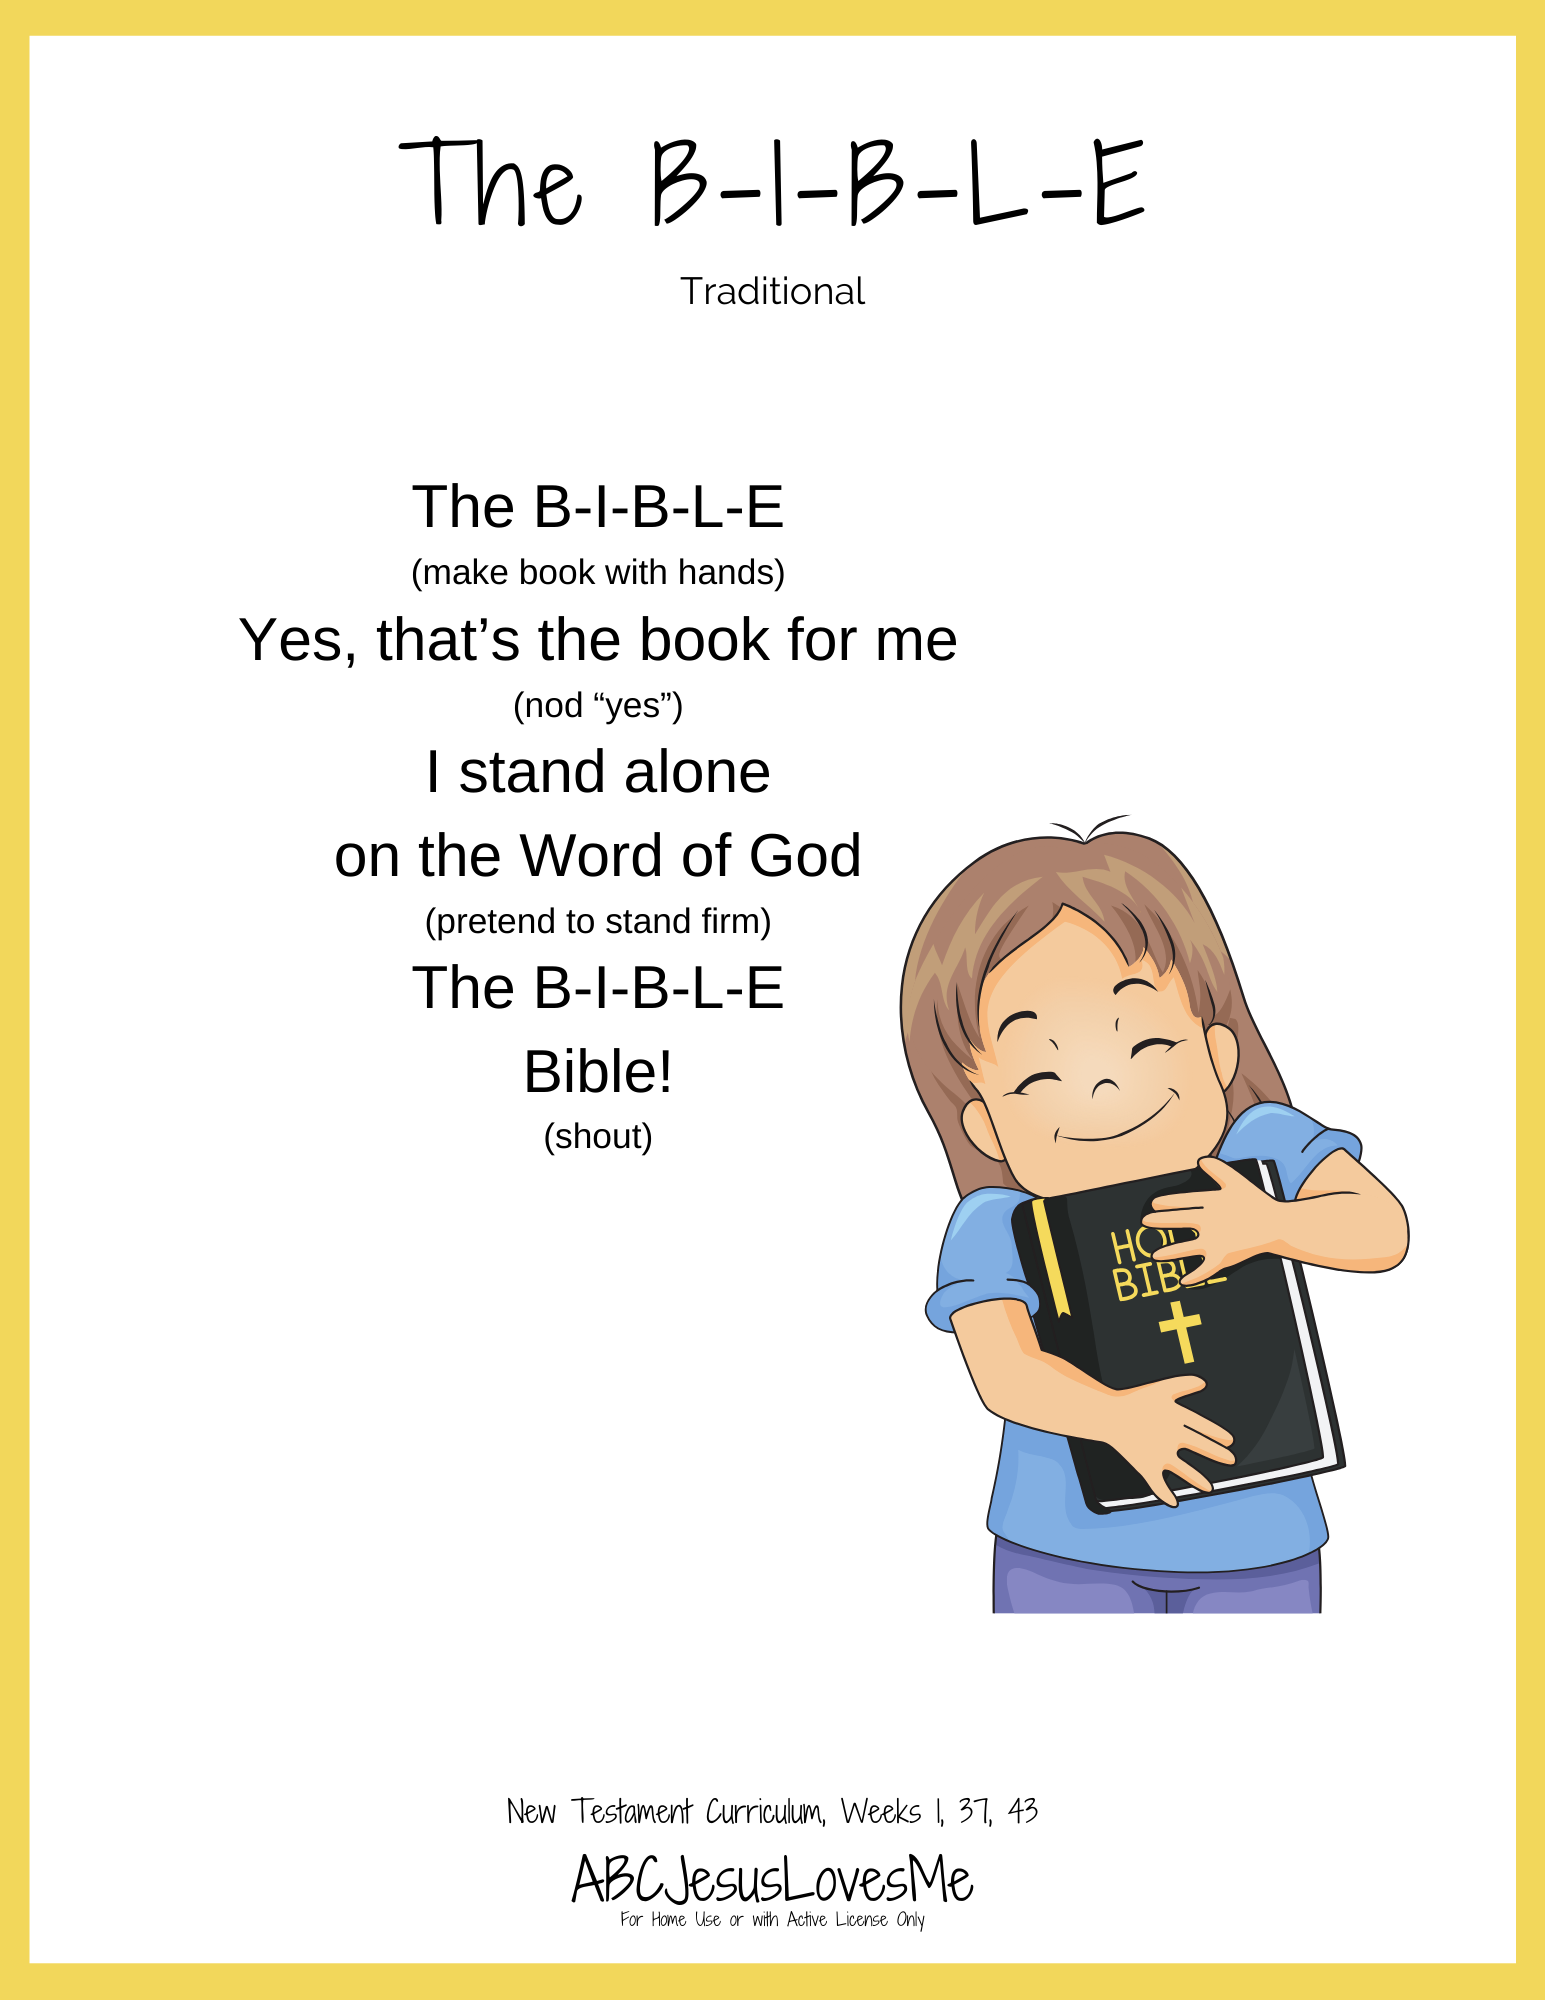 The B-I-B-L-E Bible Song